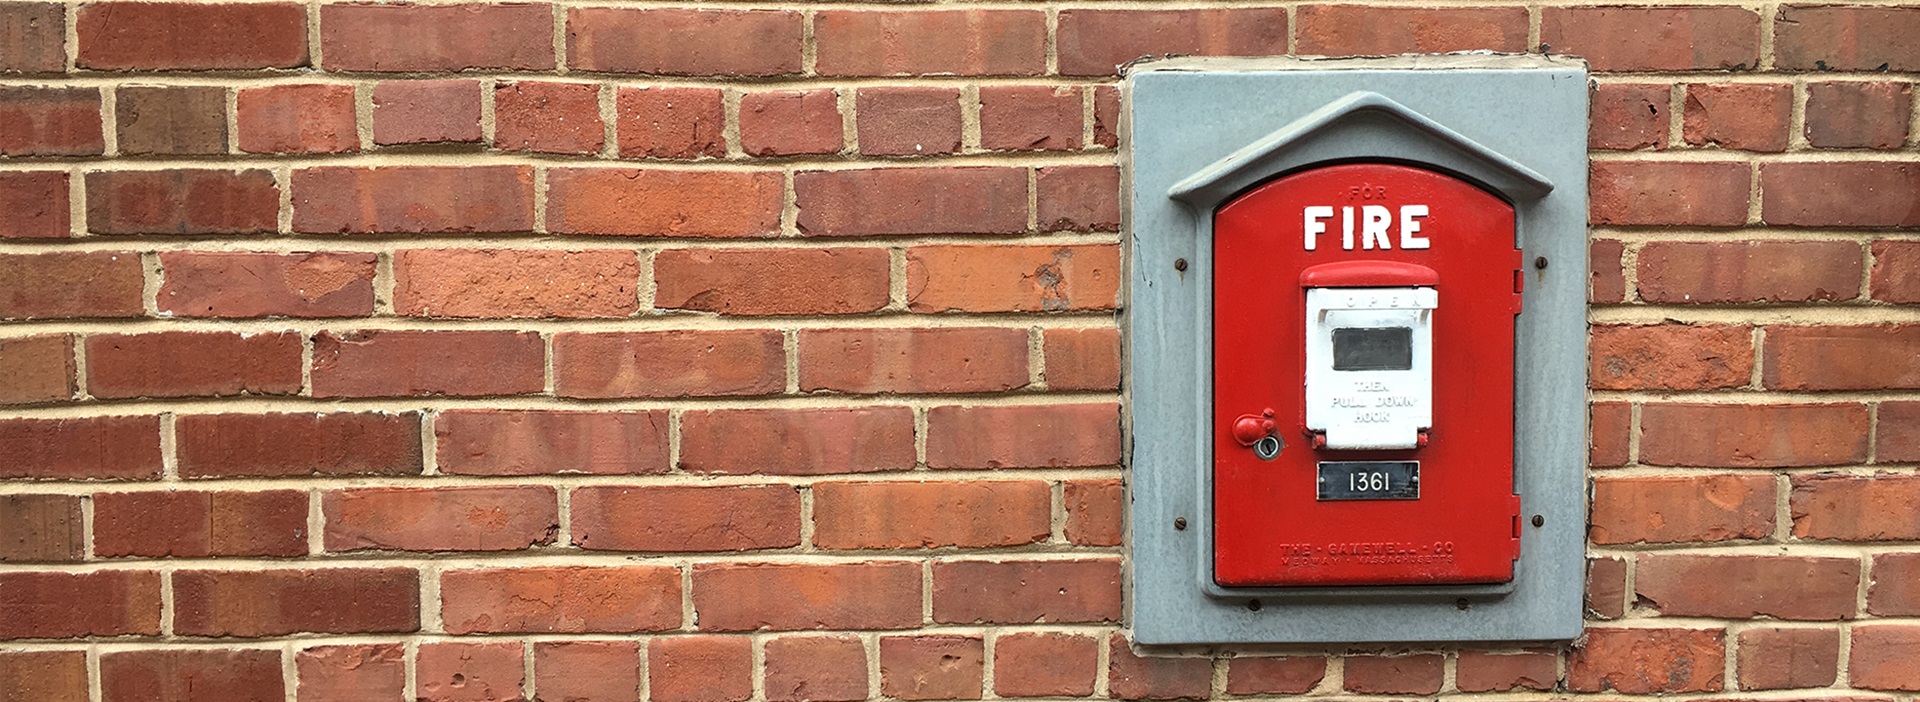 Fire alarm pull box